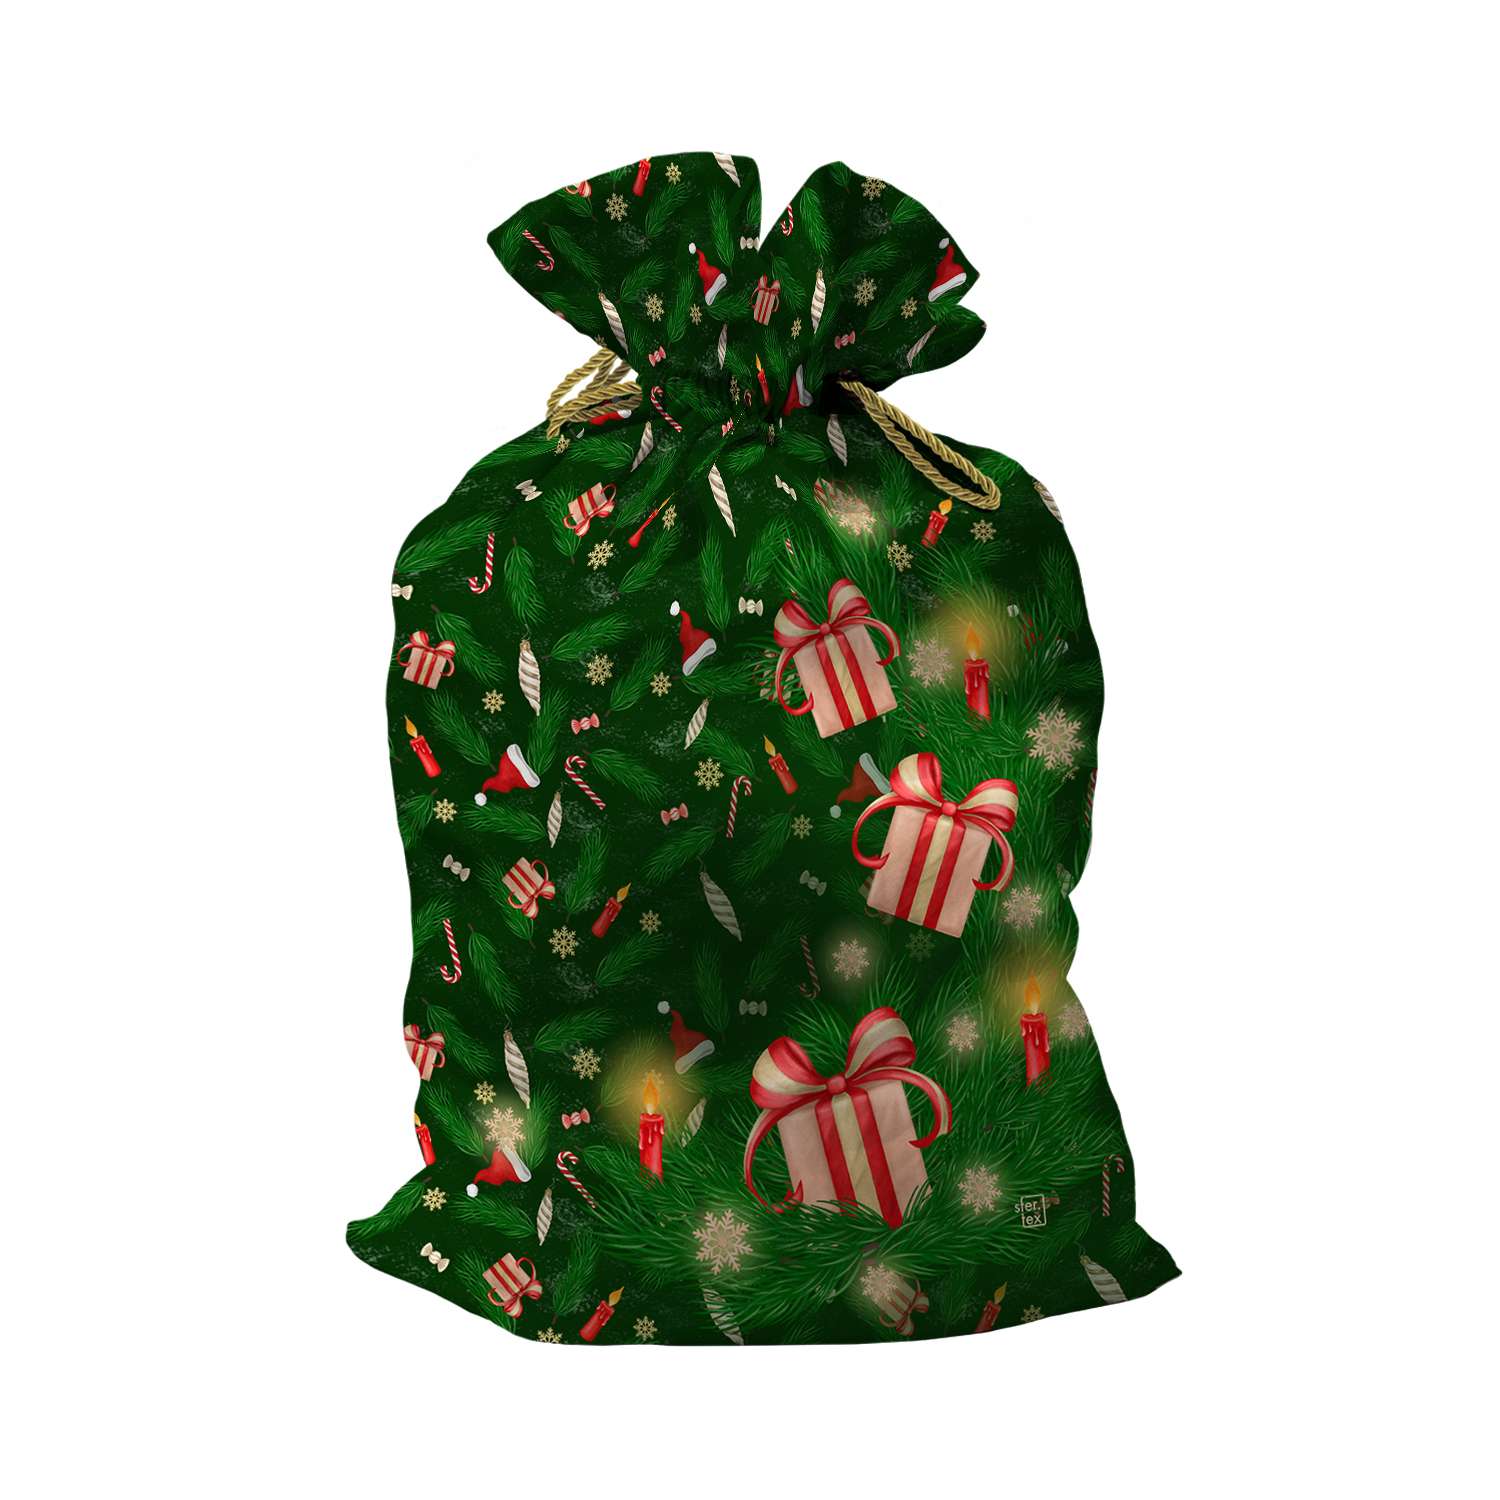 Мешок Деда Мороза sfer.tex 40х58 см Свеча зеленый - фото 1